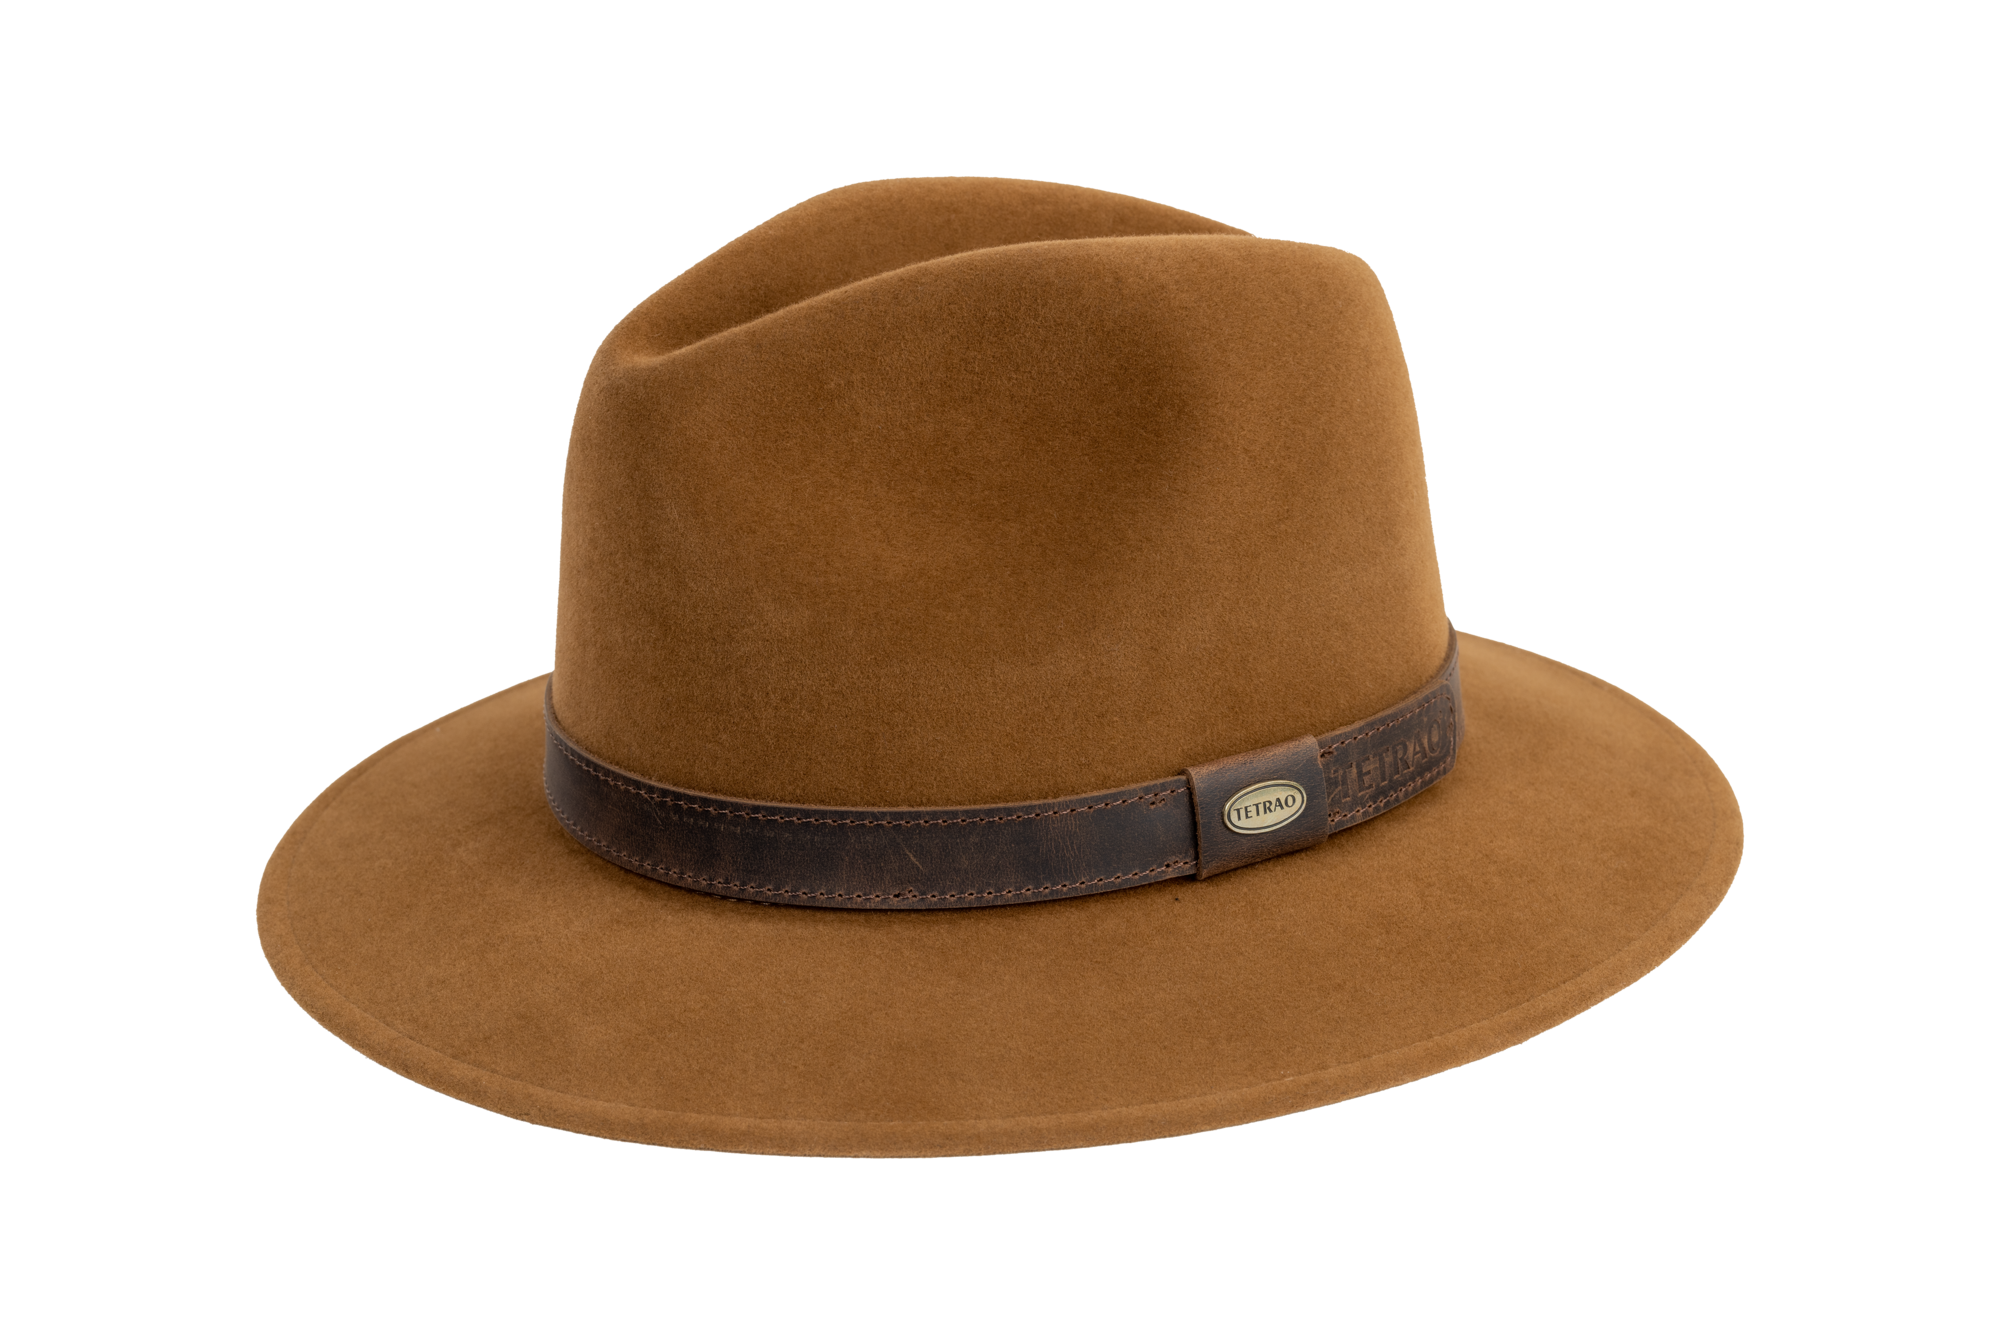 Poľovnícky klobúk TETRAO Exclusive zajac - hnedý  56